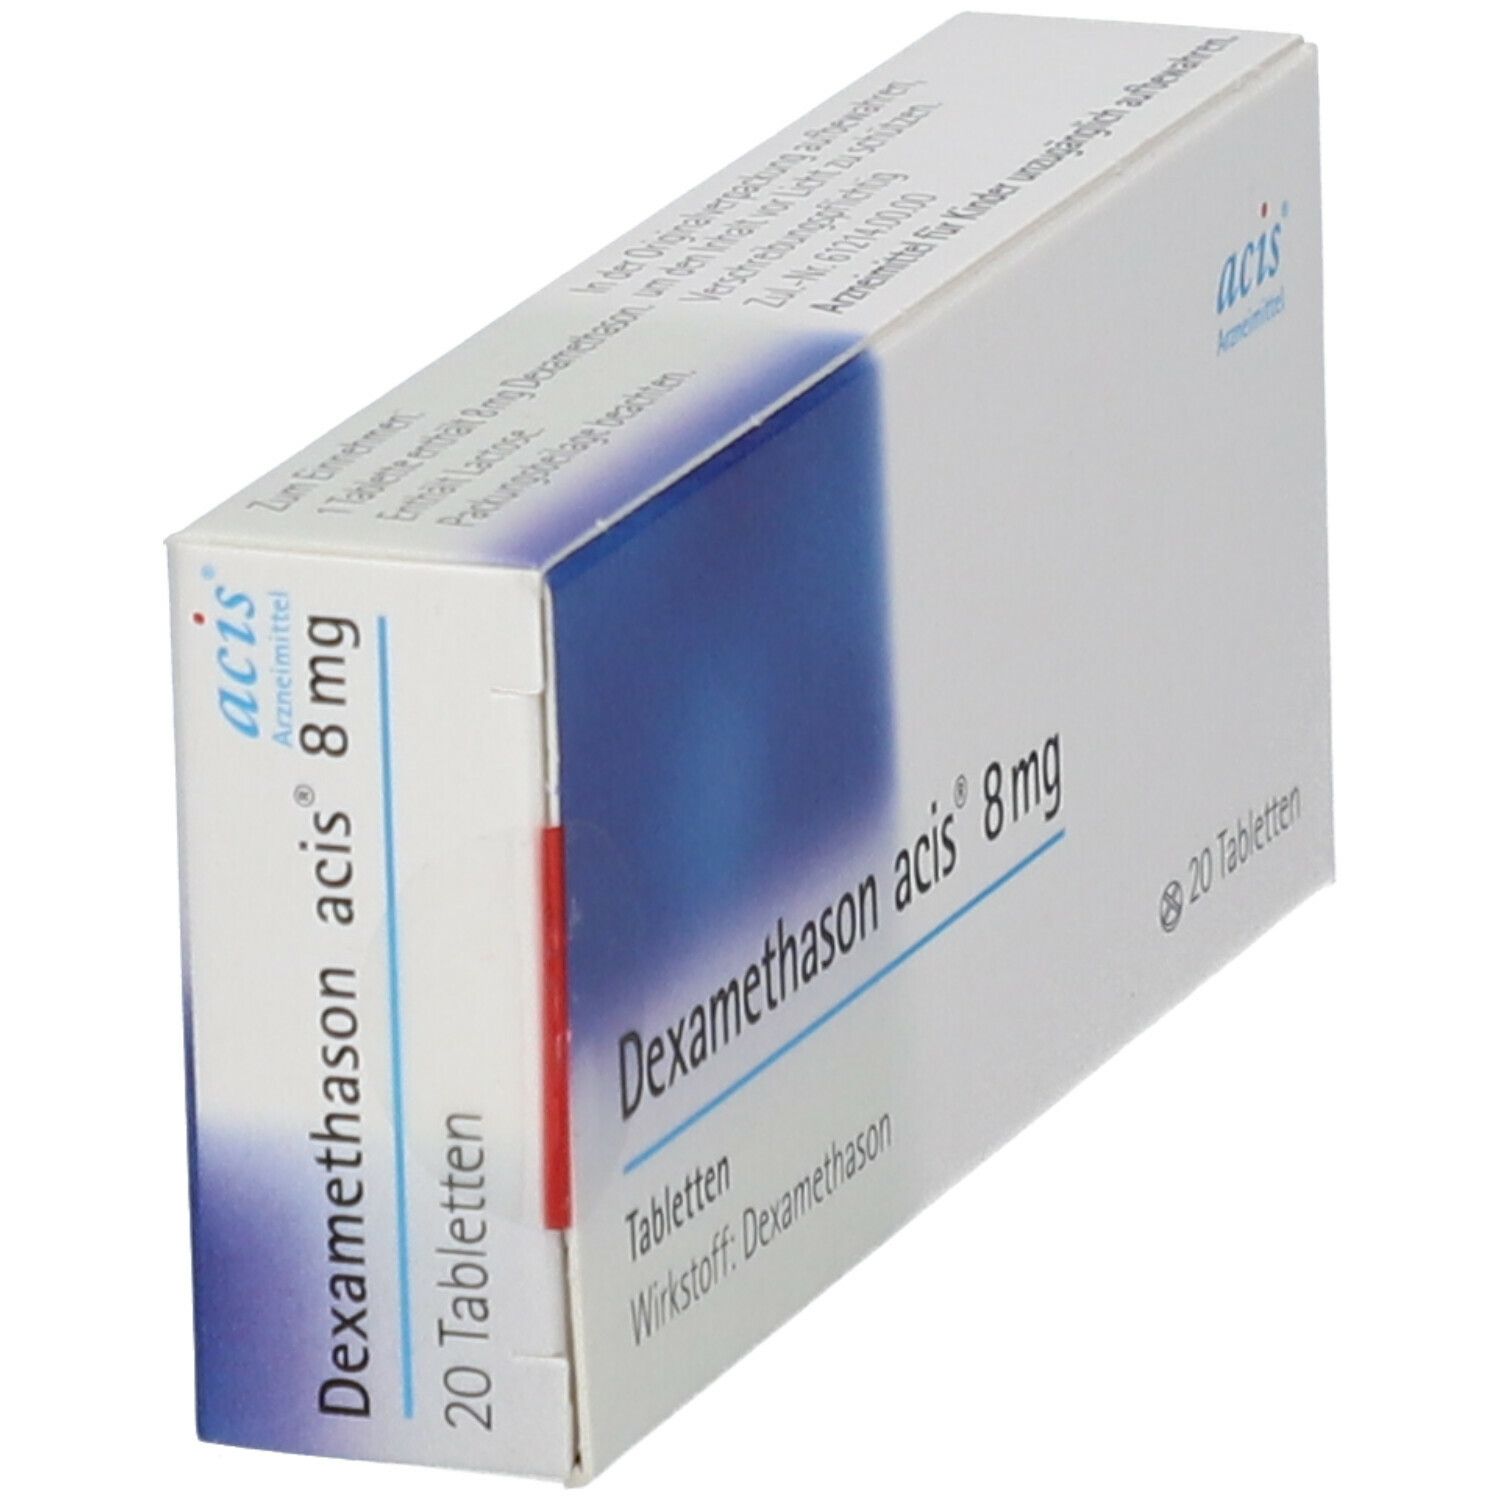 Dexamethason acis® 8 mg